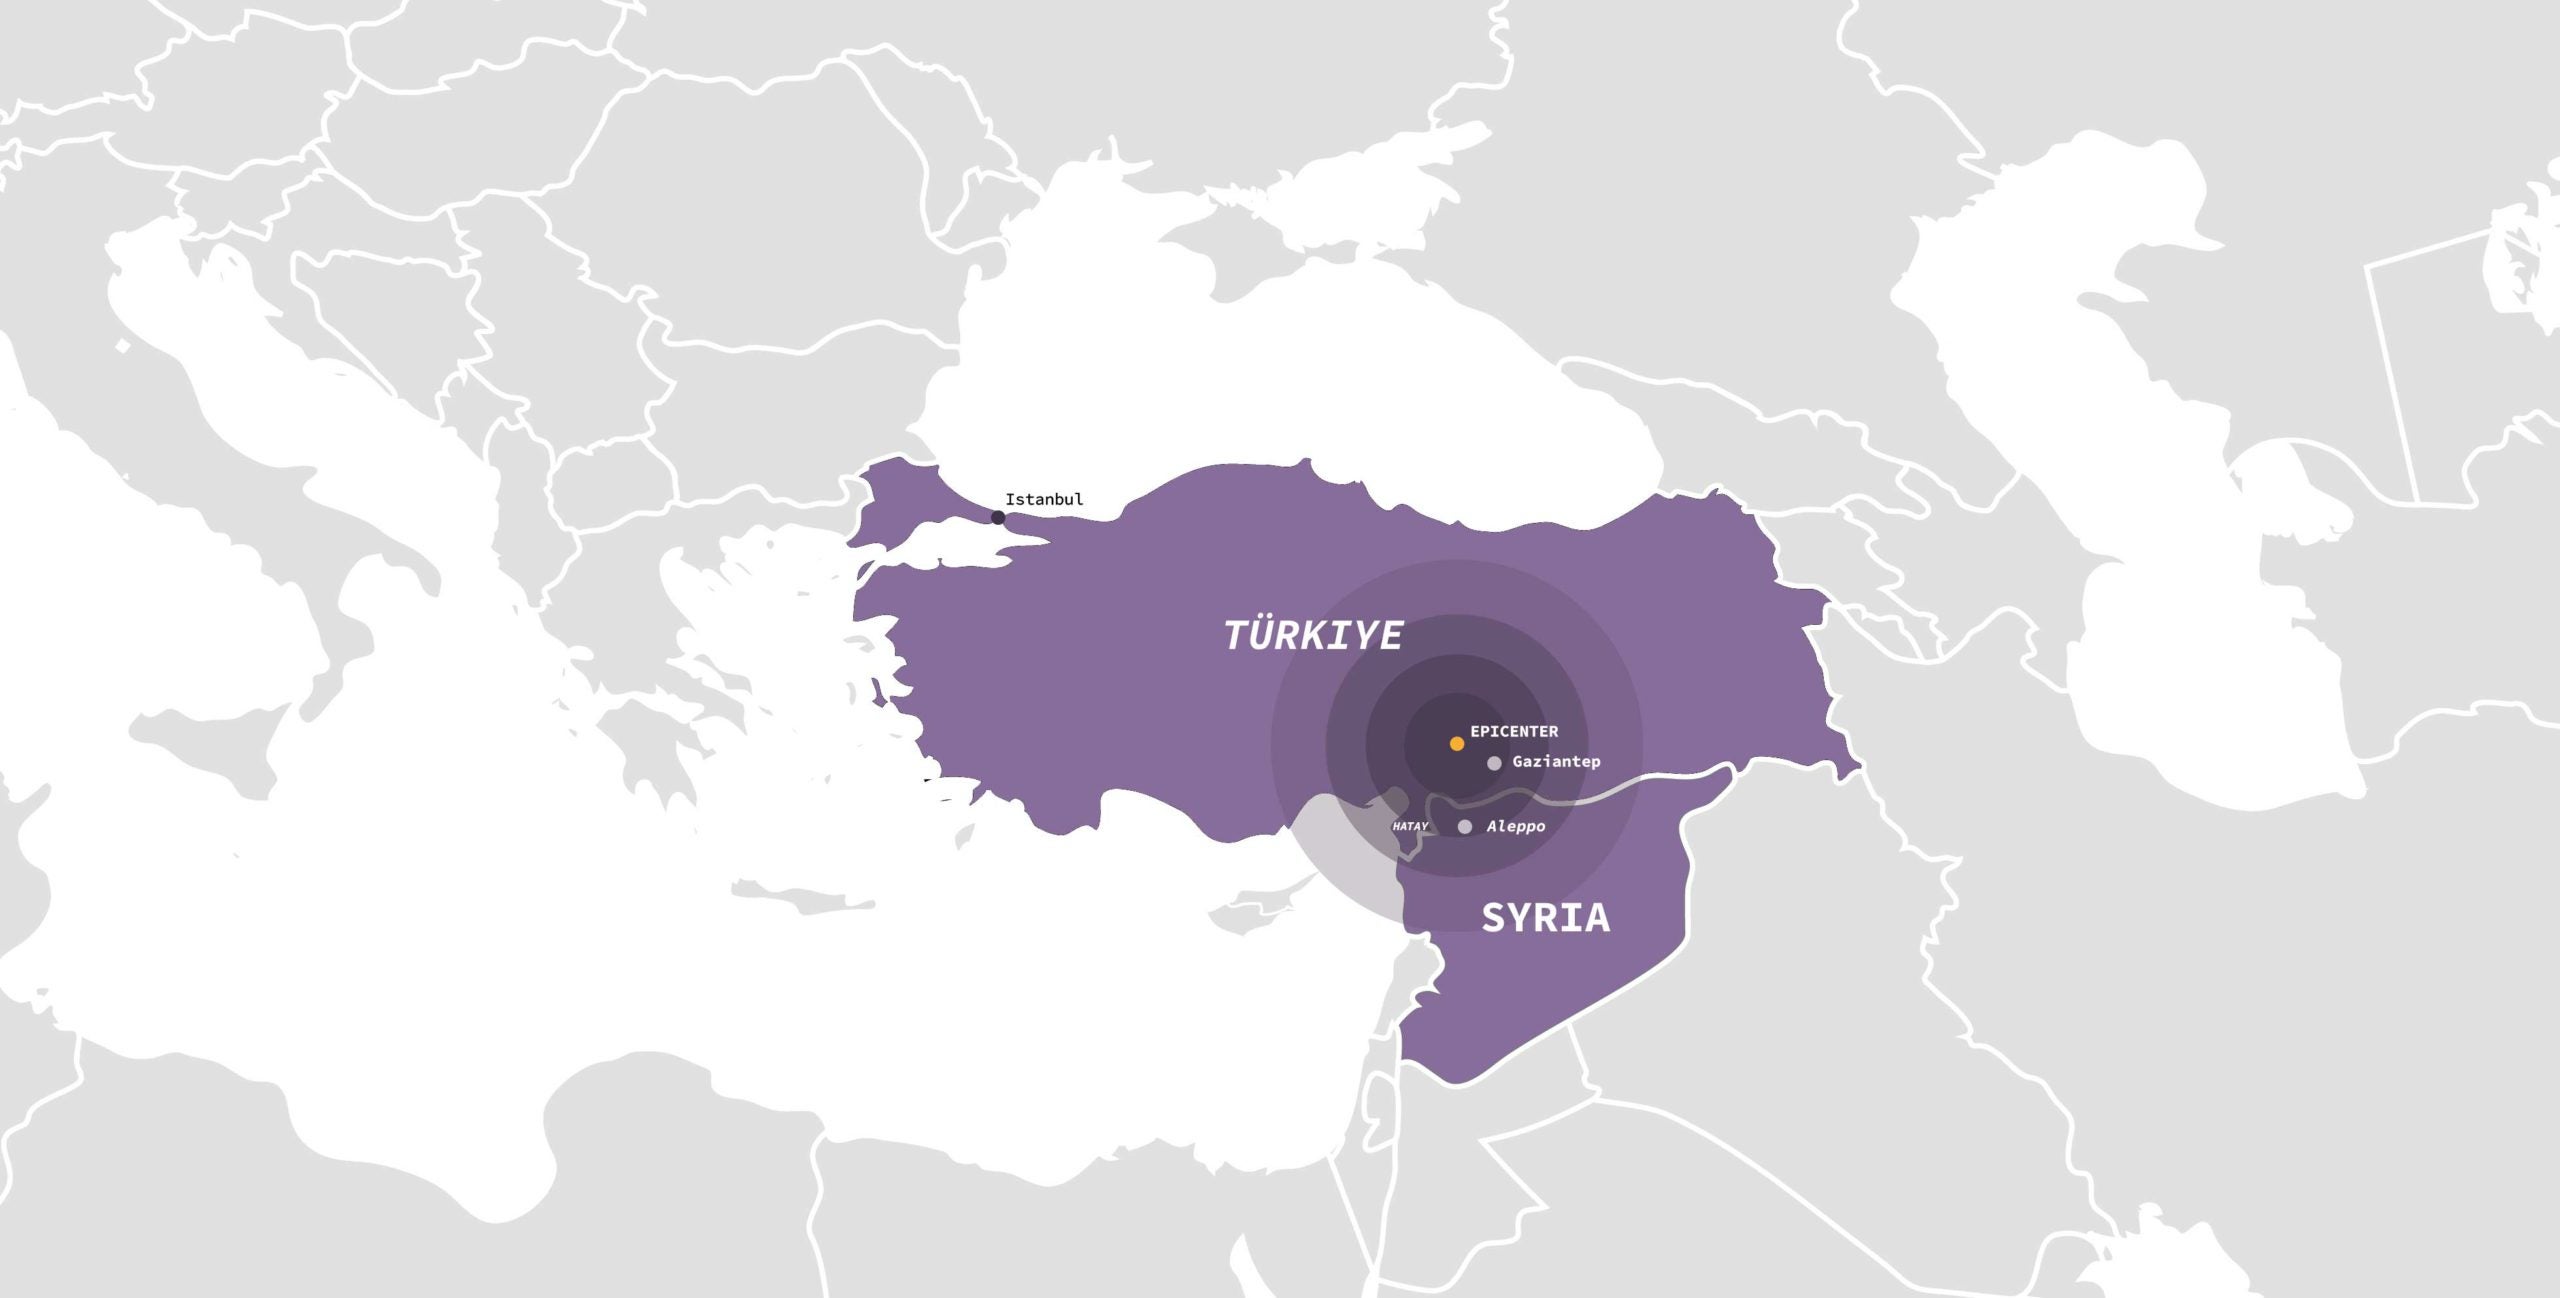 Turkiye-Syria Earthquake Map